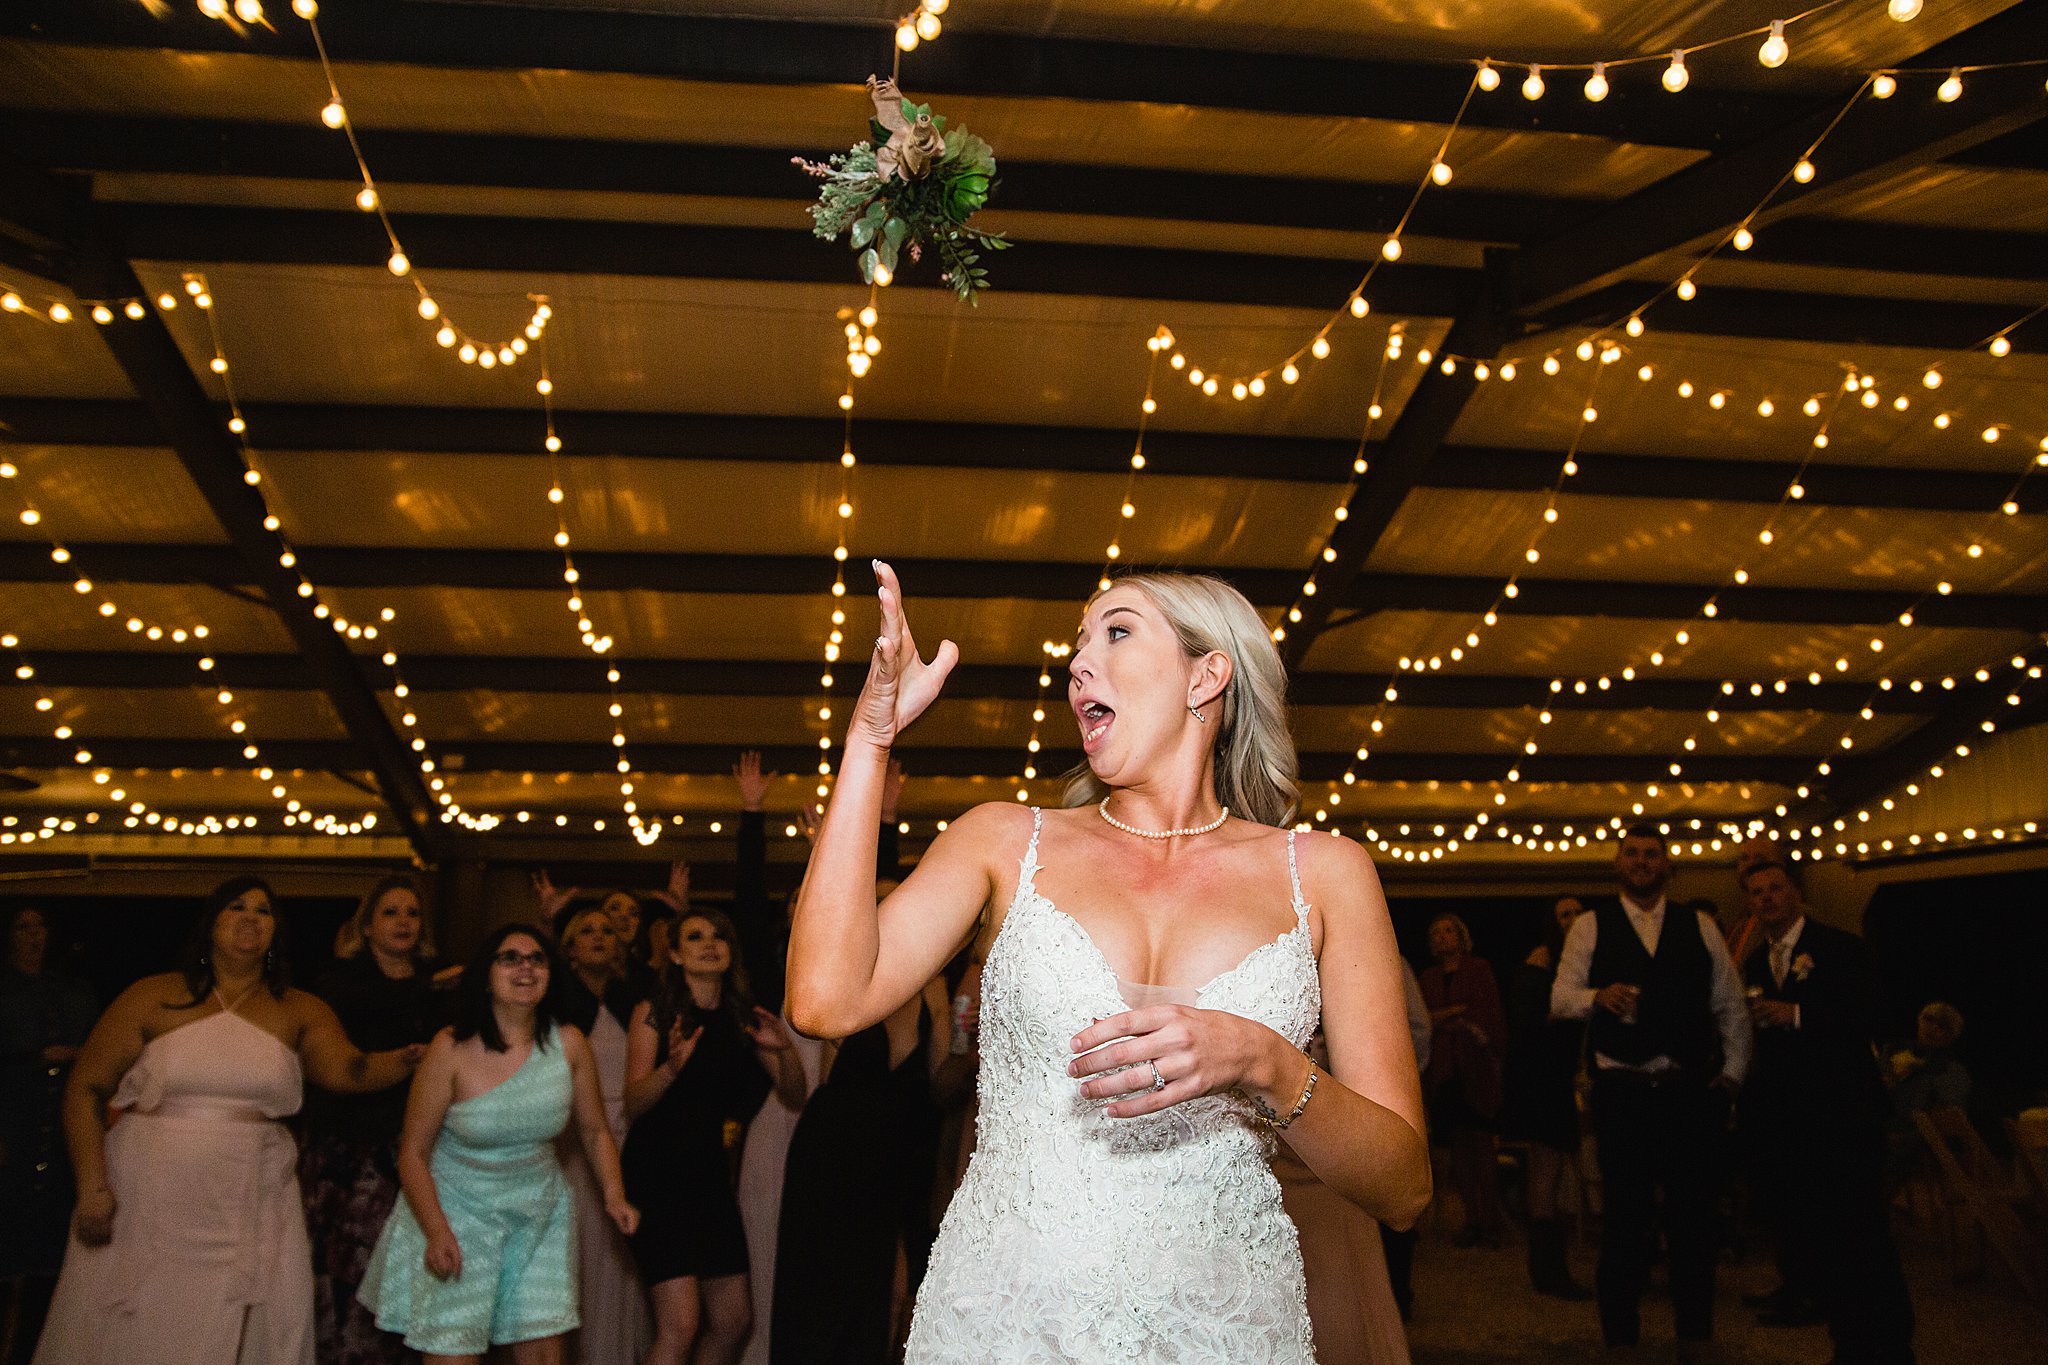 Bouquet toss at Van Dickson Ranch wedding reception by Skull Valley wedding photographer PMA Photography.